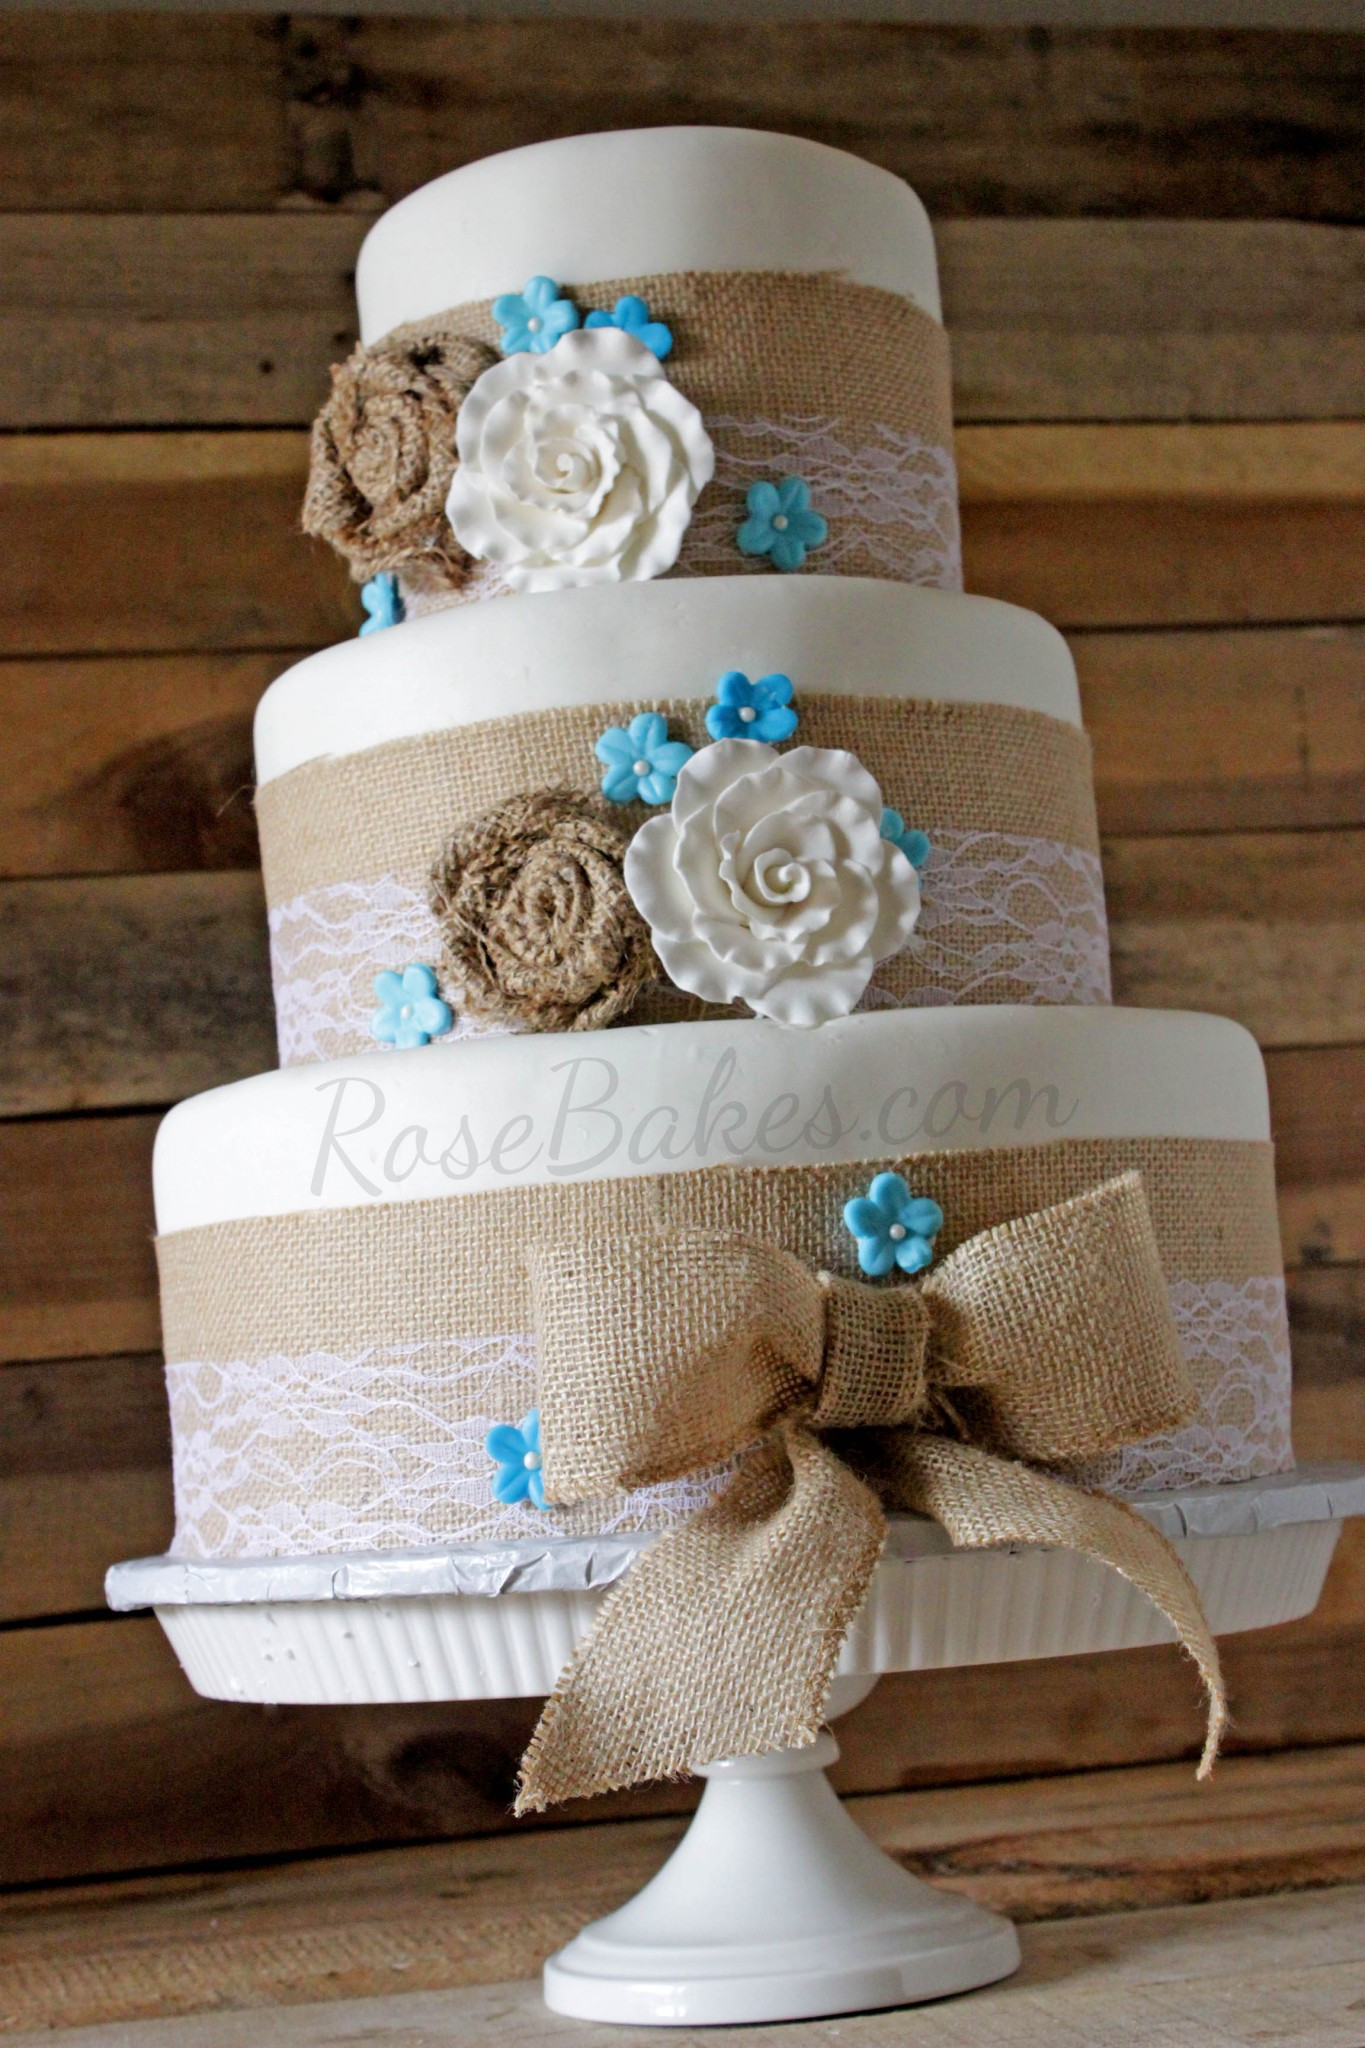 Wedding Cakes With Burlap
 Burlap & Lace Rustic Wedding Cake Rose Bakes